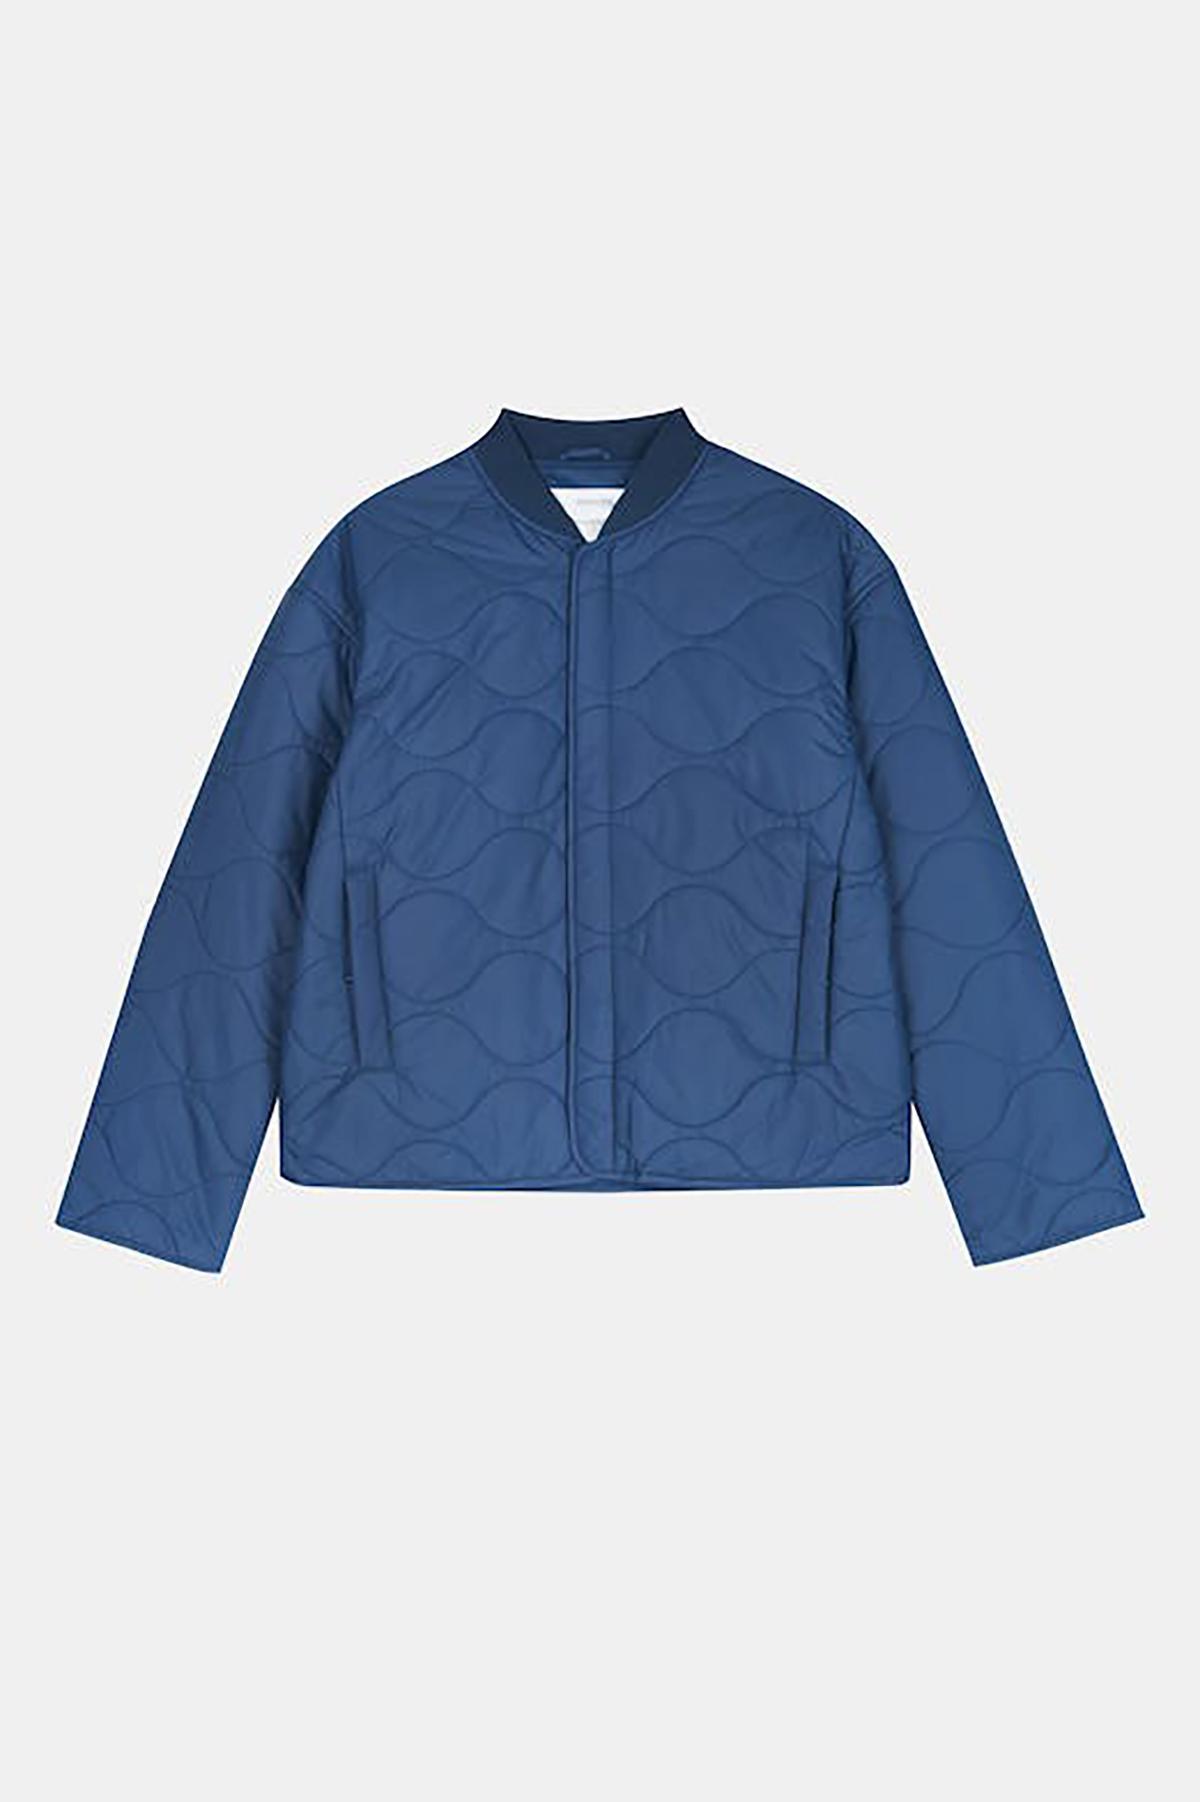 Куртка, SHU, 8990 руб. (shuclothes.com)